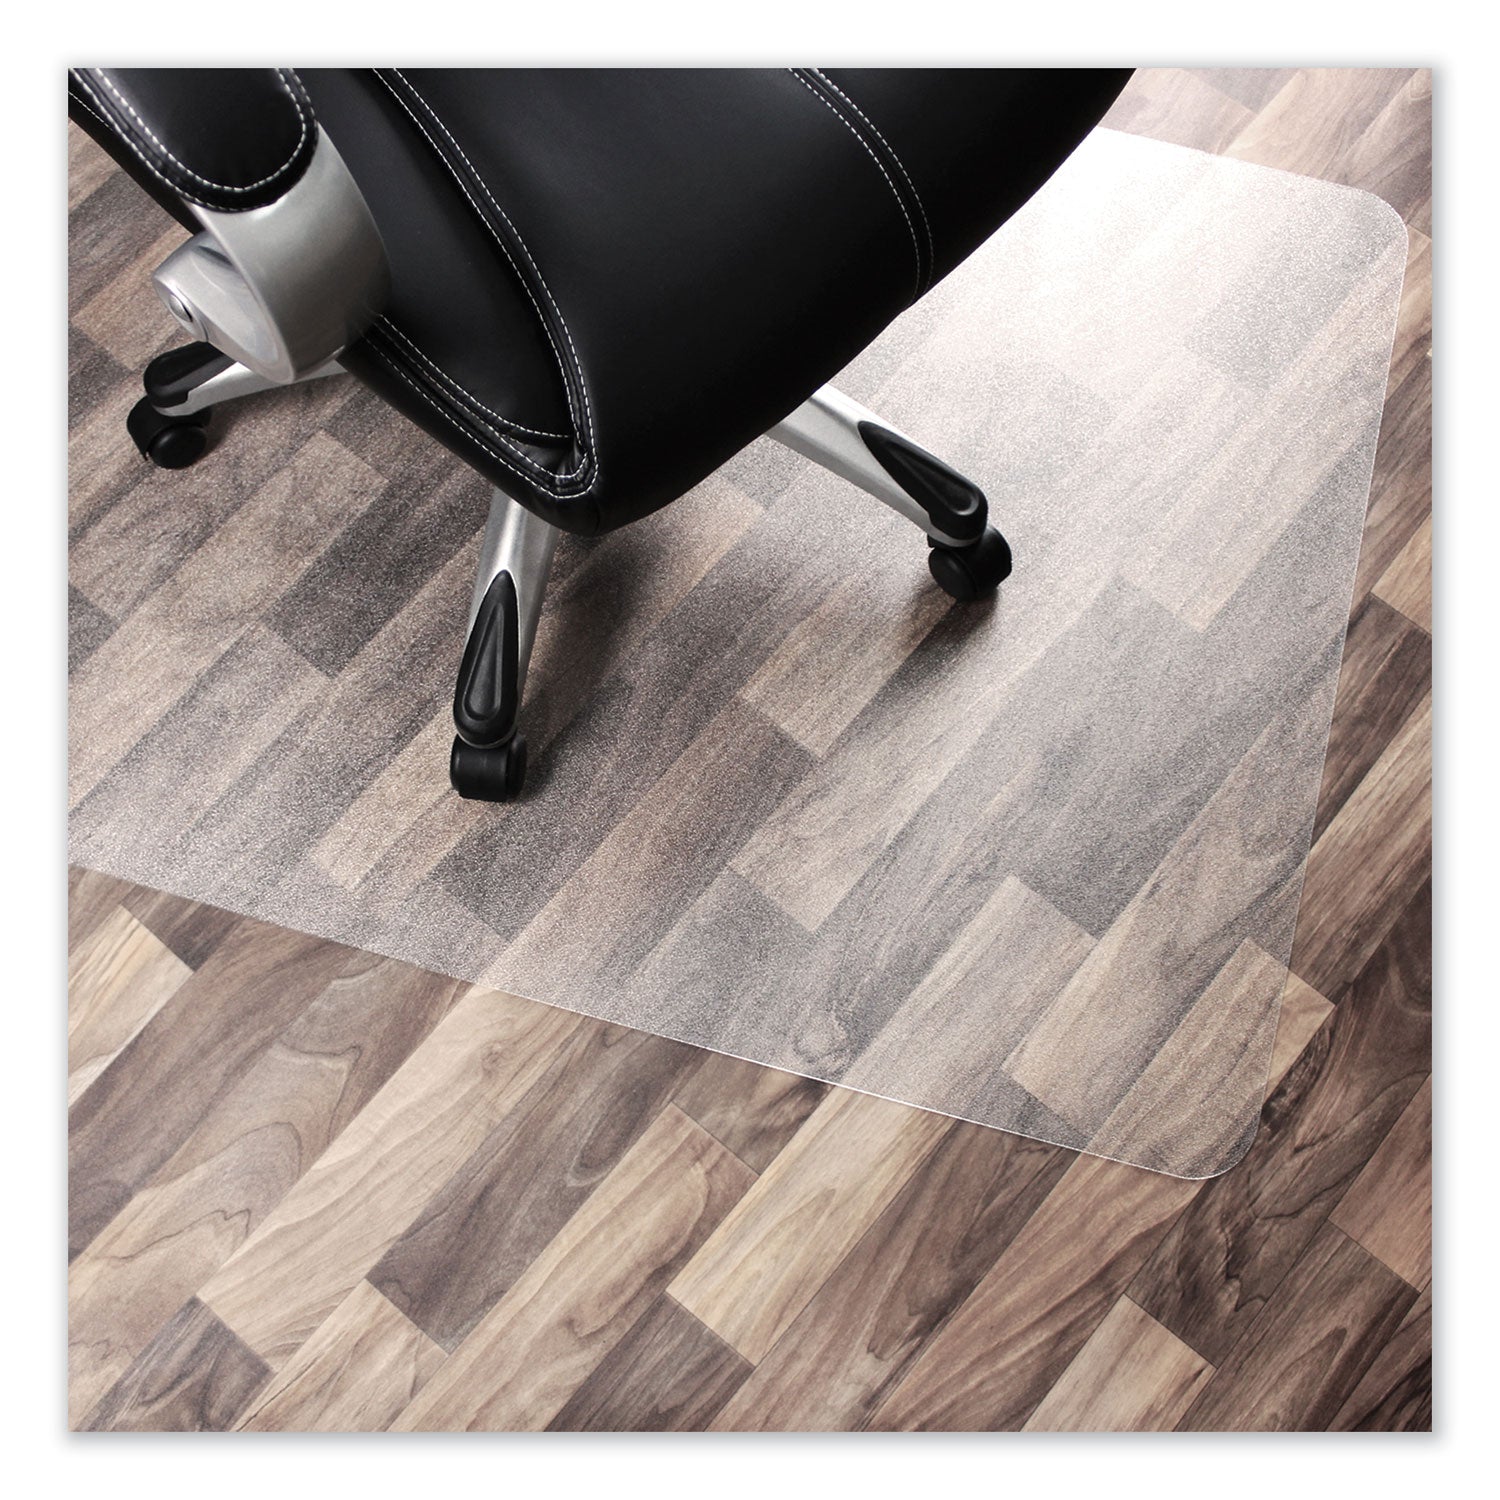 cleartex-unomat-anti-slip-chair-mat-for-hard-floors-flat-pile-carpets-60-x-48-clear_flrec1215020era - 3